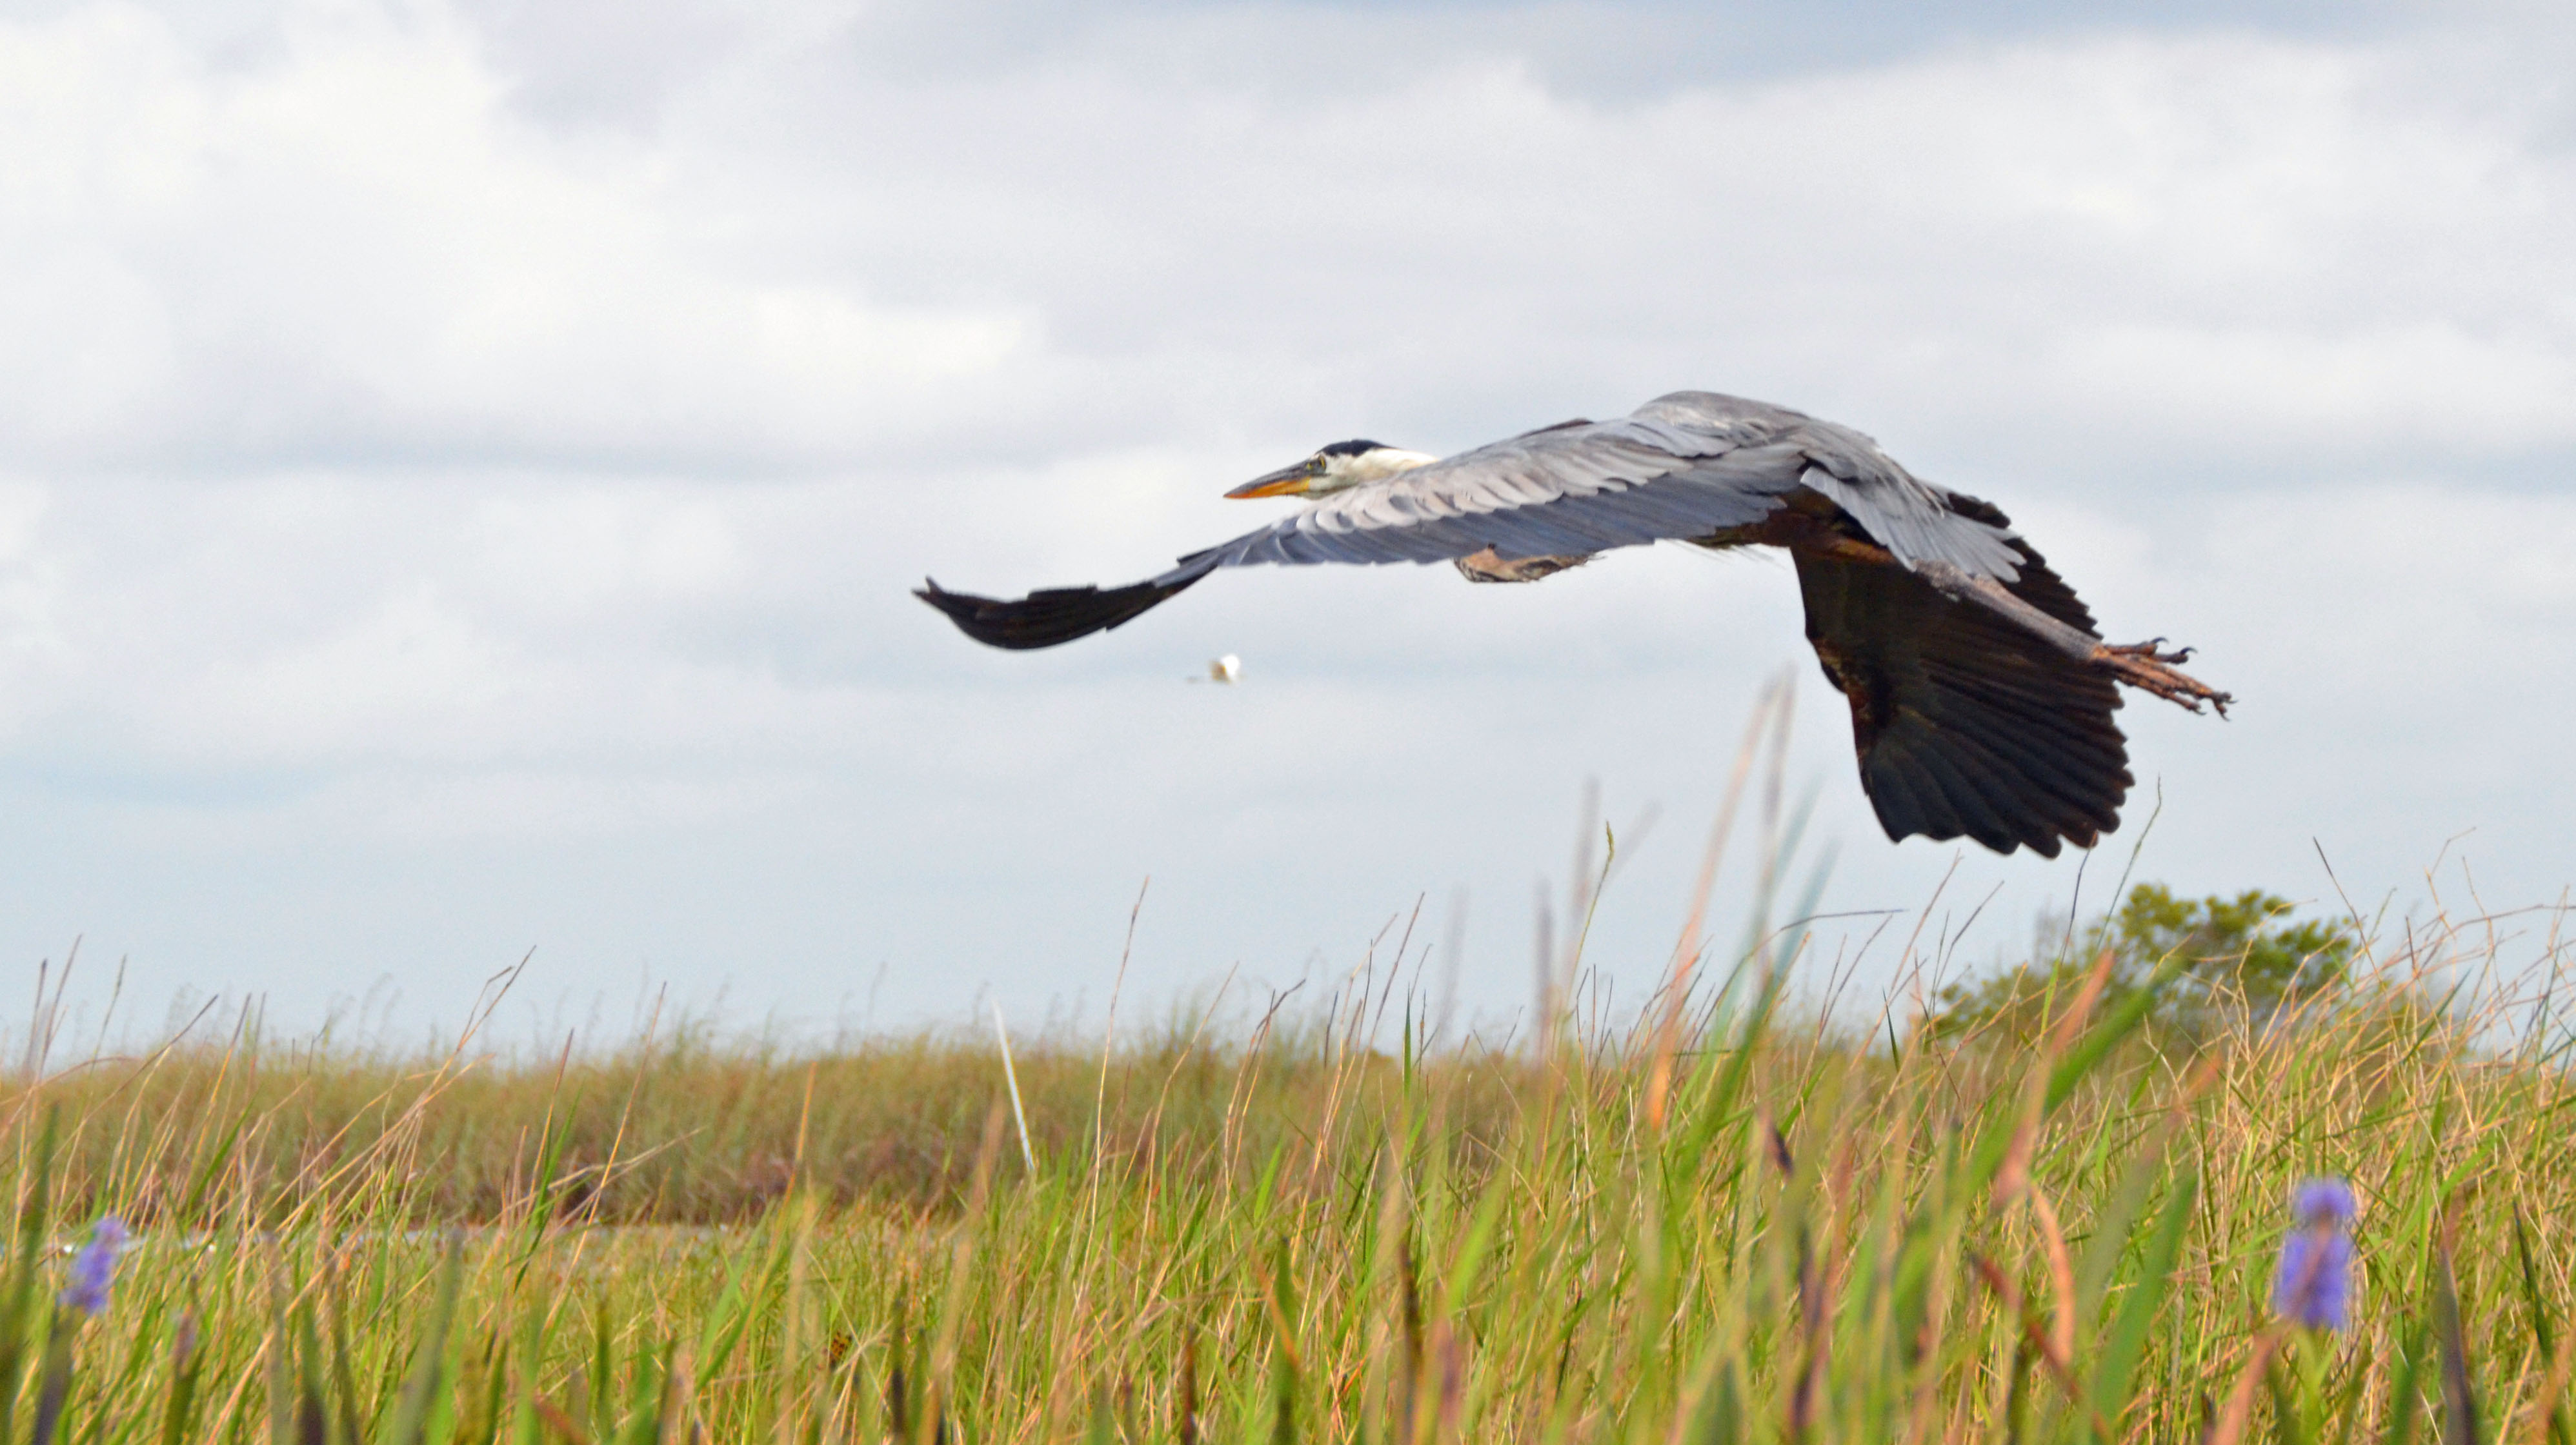 Great Blue Heron taking flight